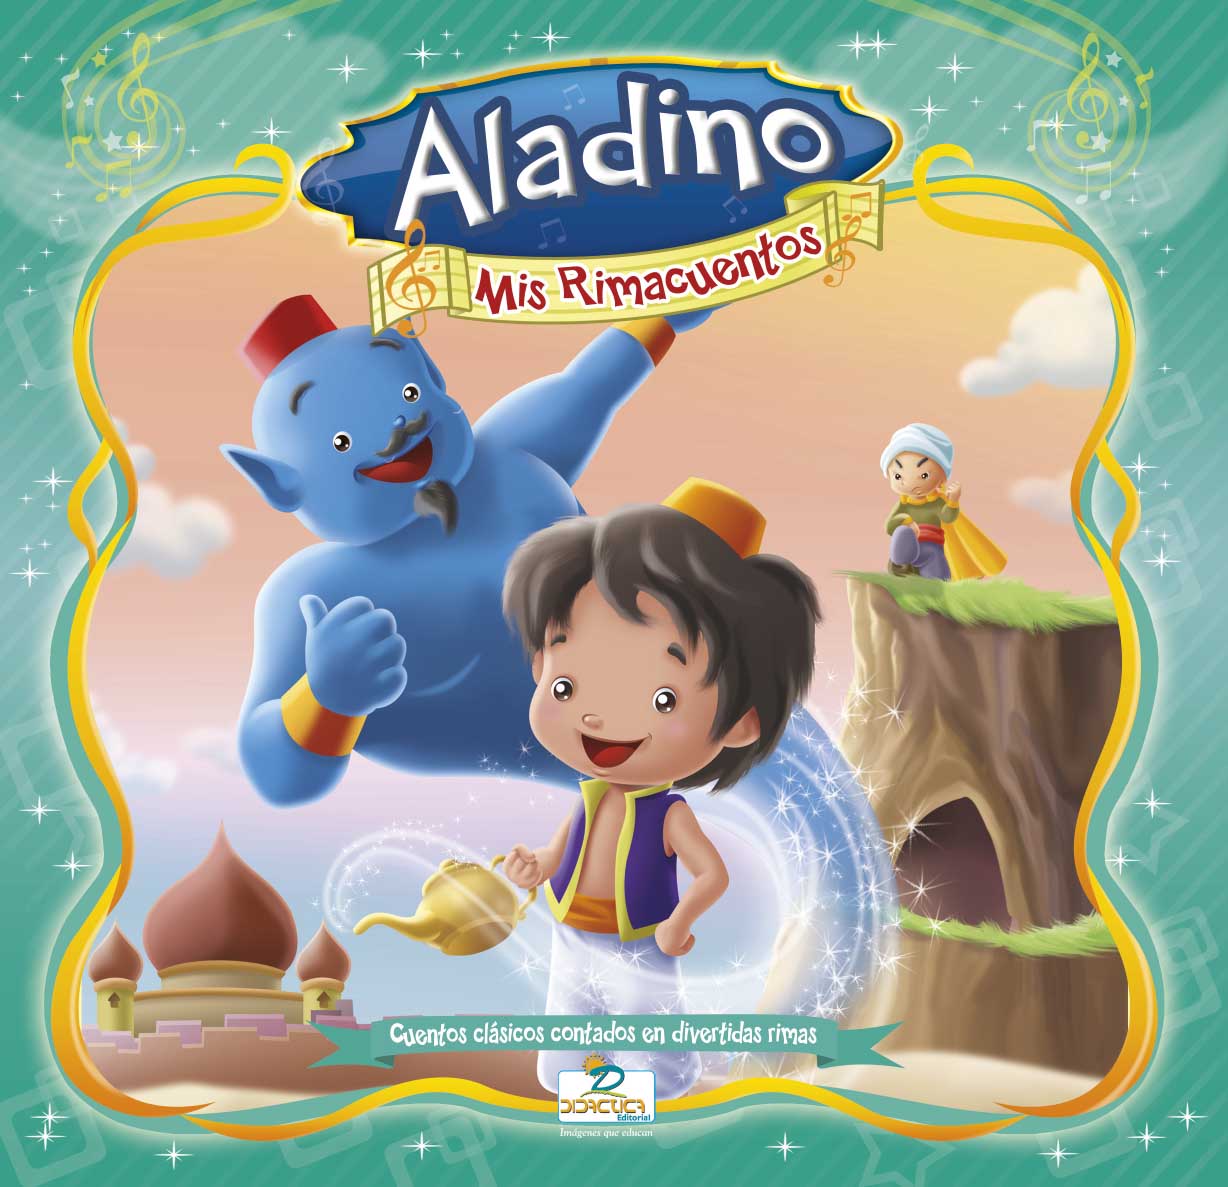 Aladino.indd